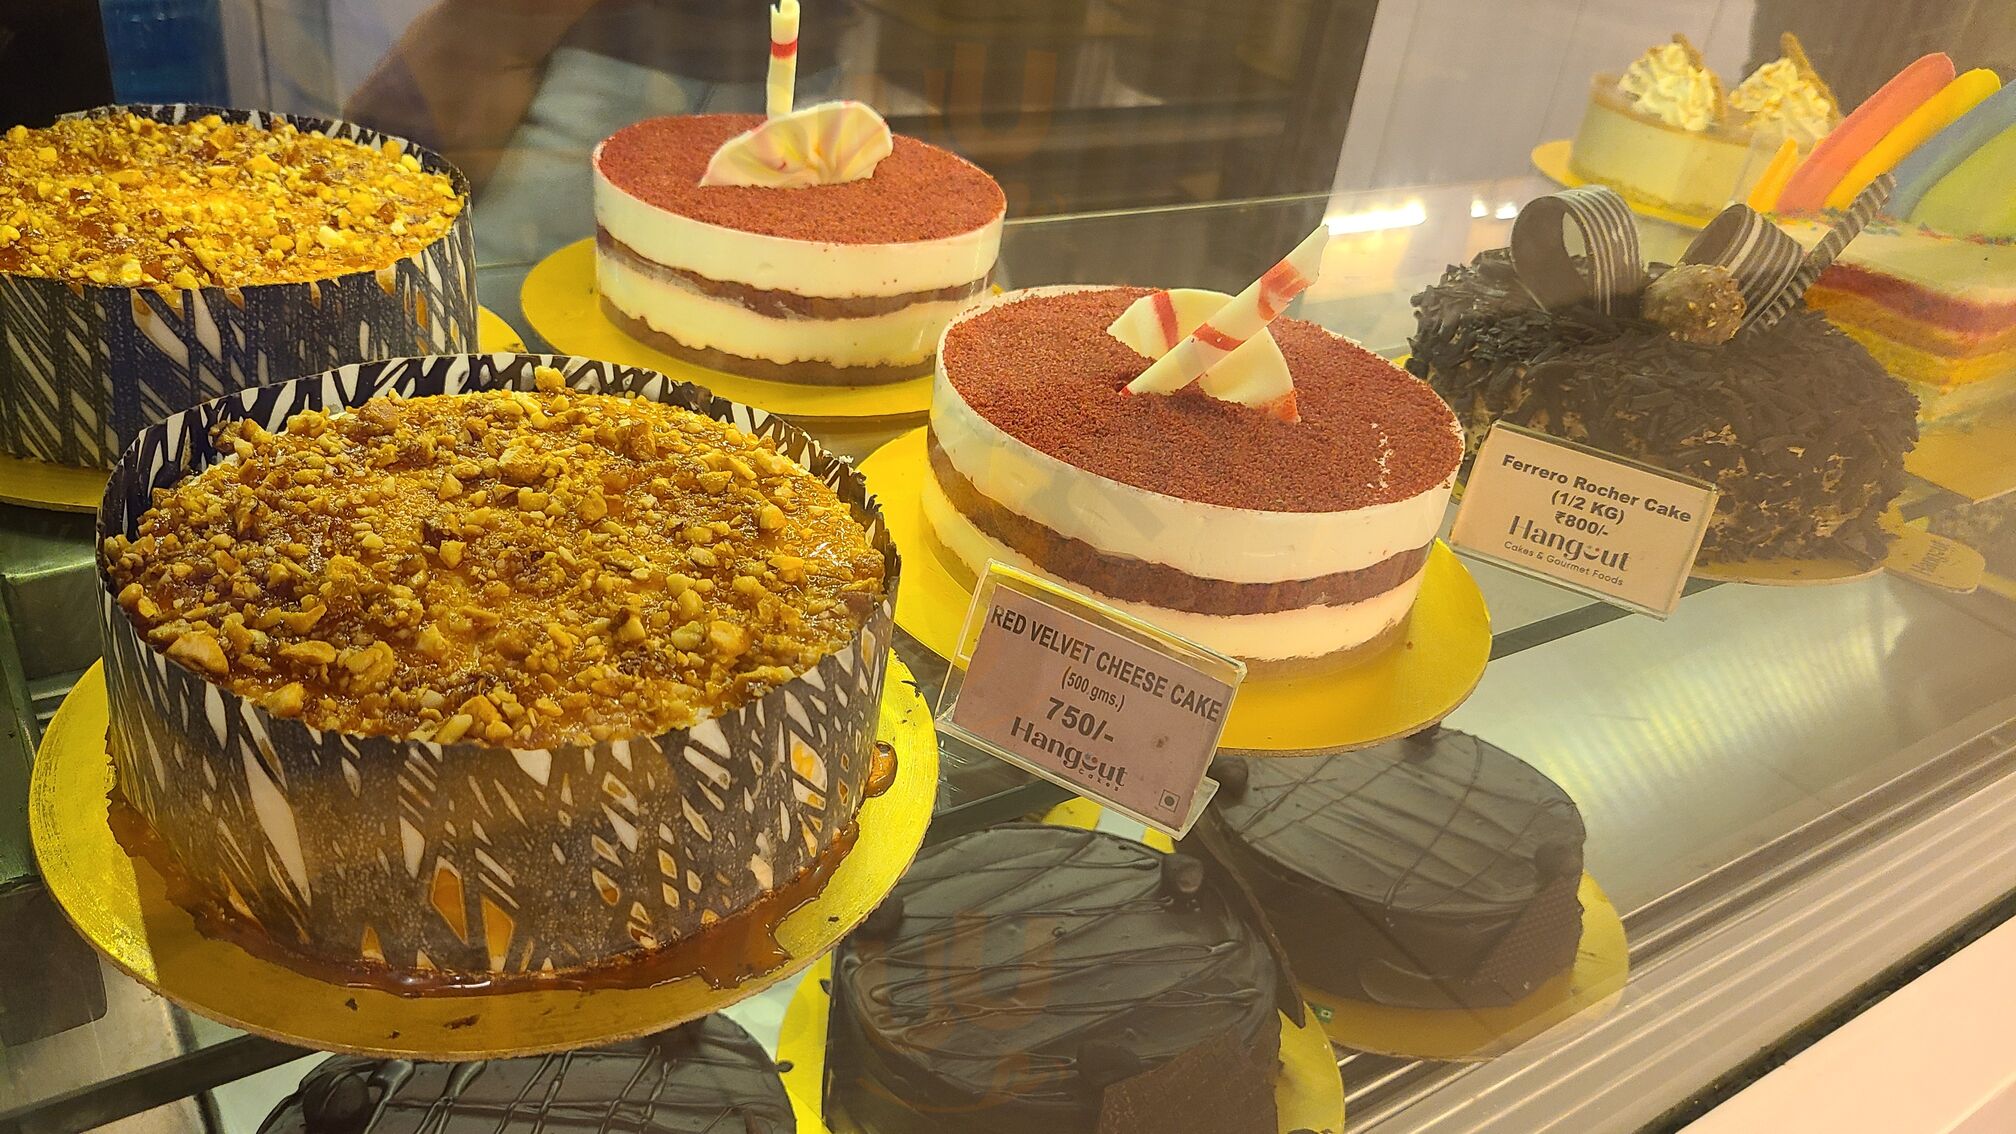 Pinterest inspired birthday cake 🎂 Flavour - kitkat #kitkatcake  #25thbirthdaycake #25birthdaycake #whippedcreamcake #fondantaccents… |  Instagram